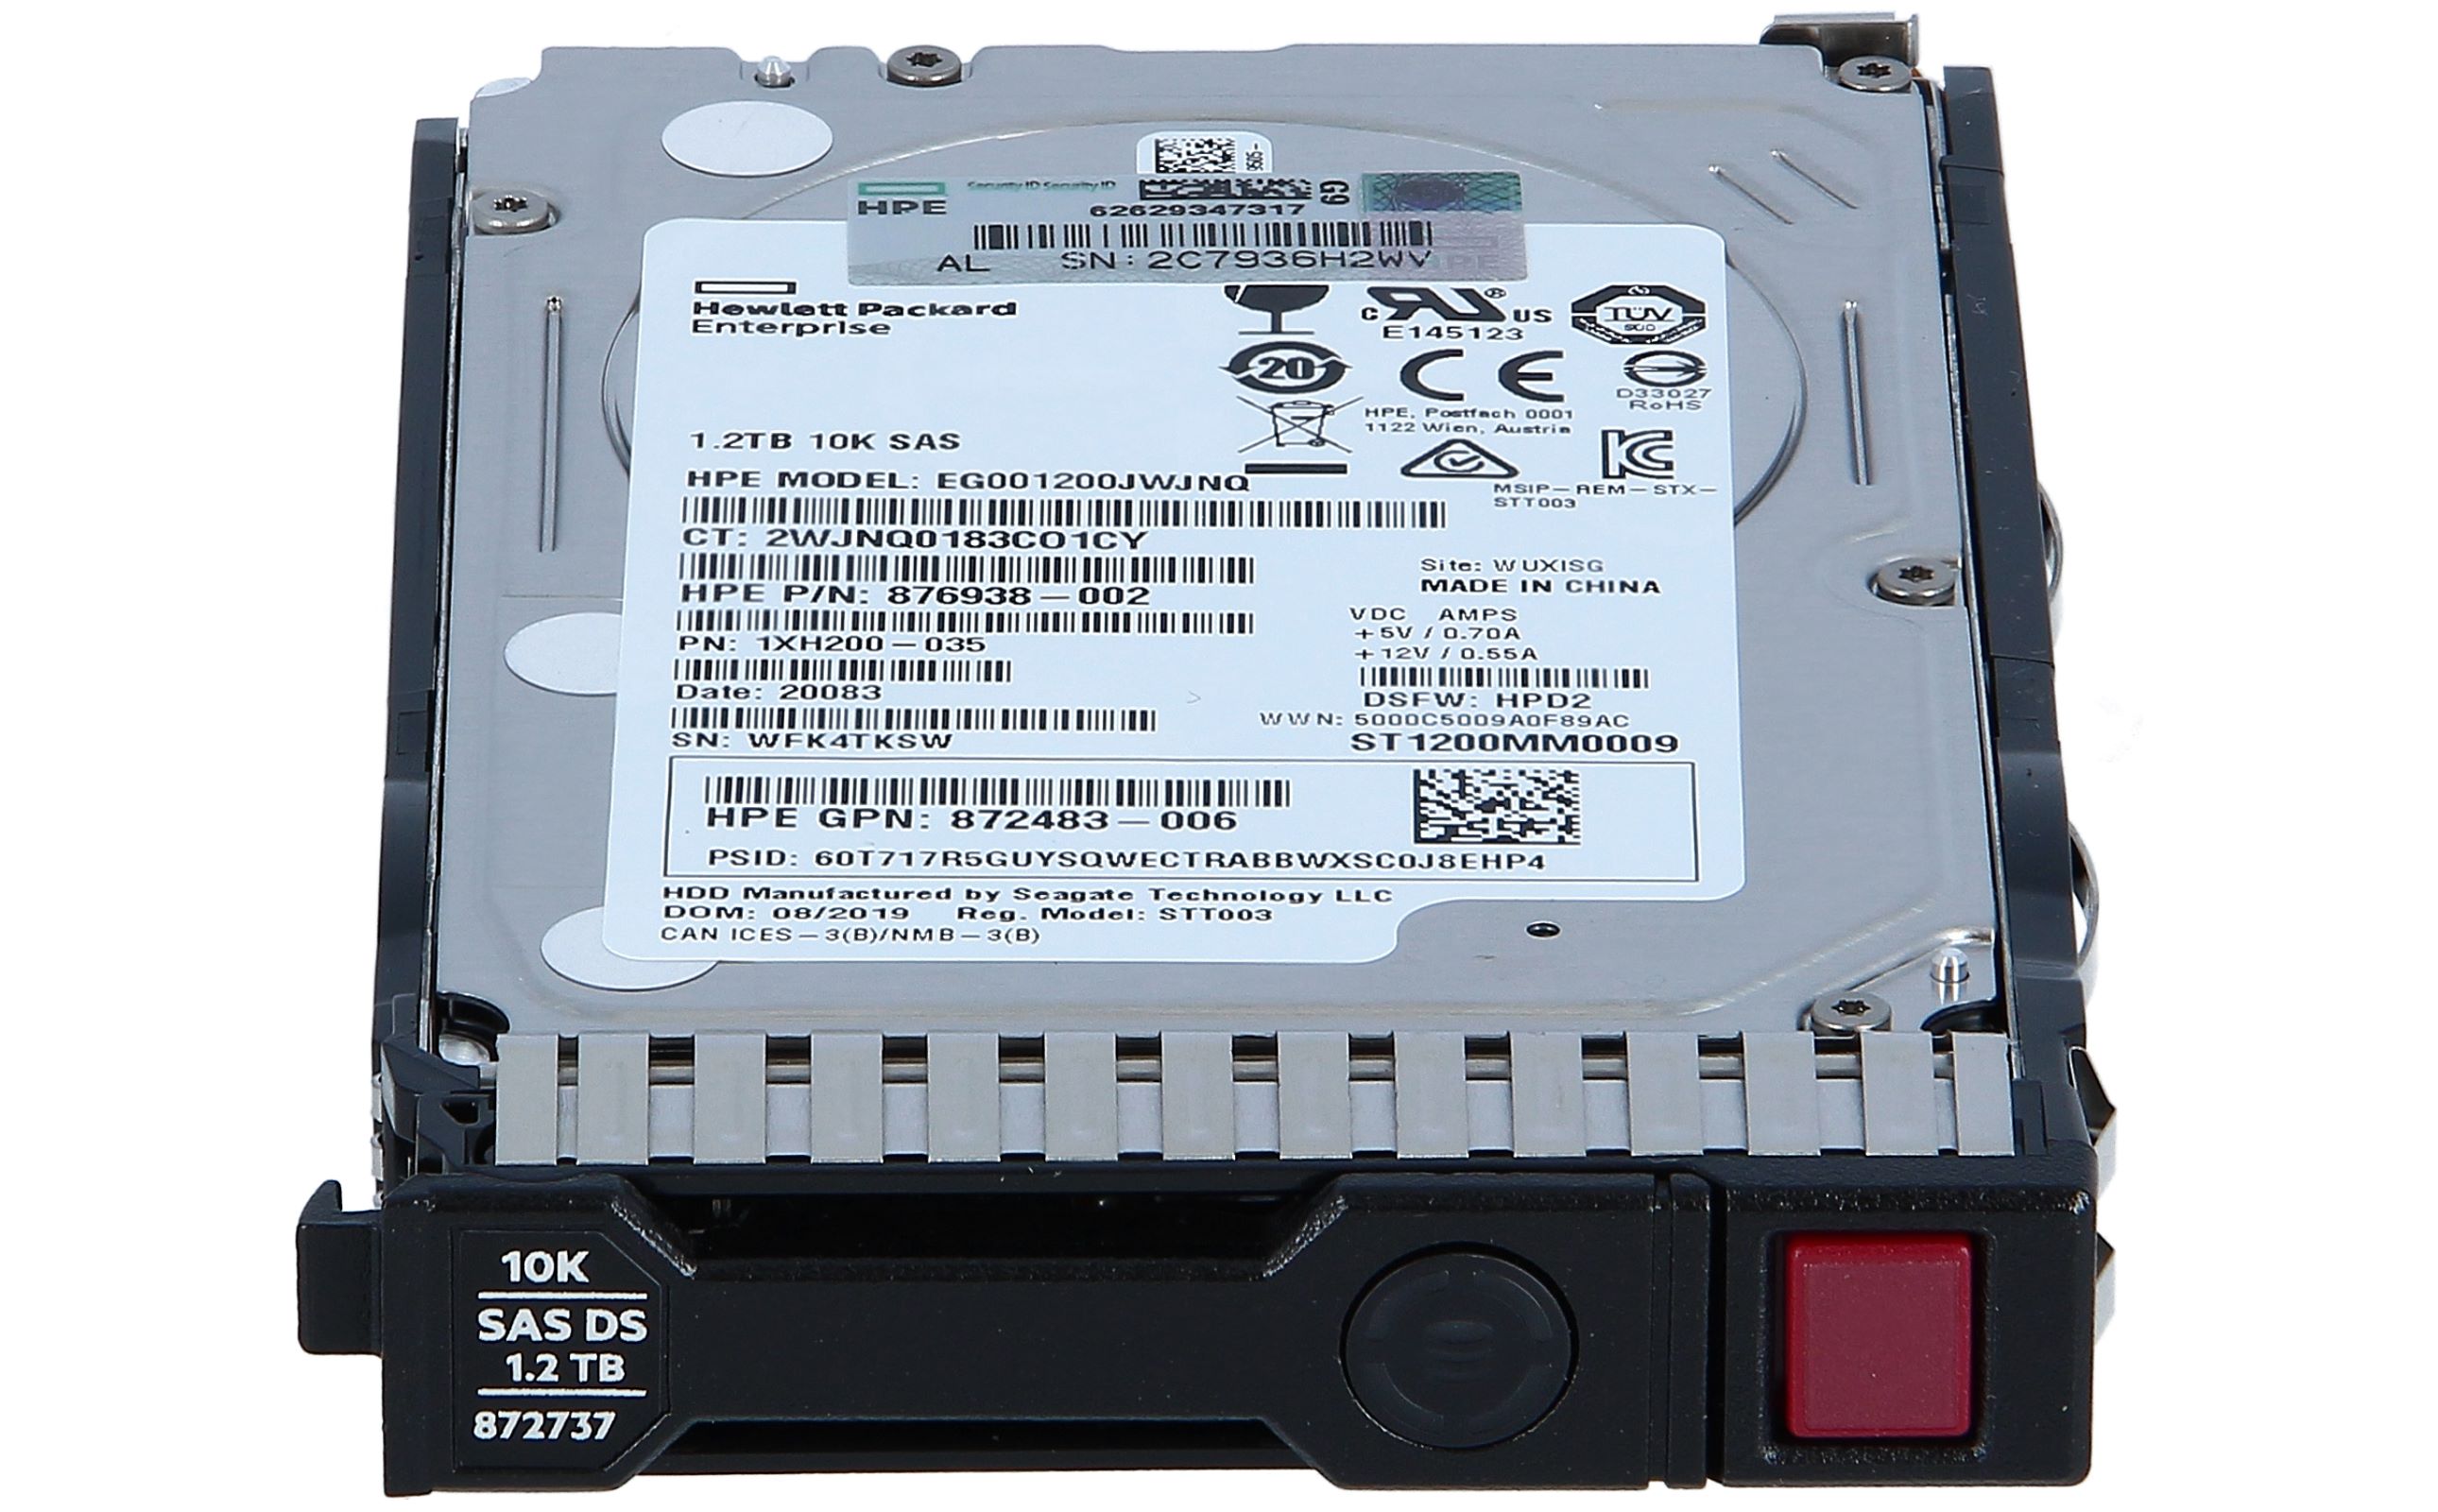 HP 665750-001 300GB Hard Drive Disk (HDD) 15%ｶﾝﾏ0 RPM%ｶﾝﾏ% 6Gb per  sencond transfer rate%ｶﾝﾏ% Small Form Factor (SFF) [並行輸入品] 通販 